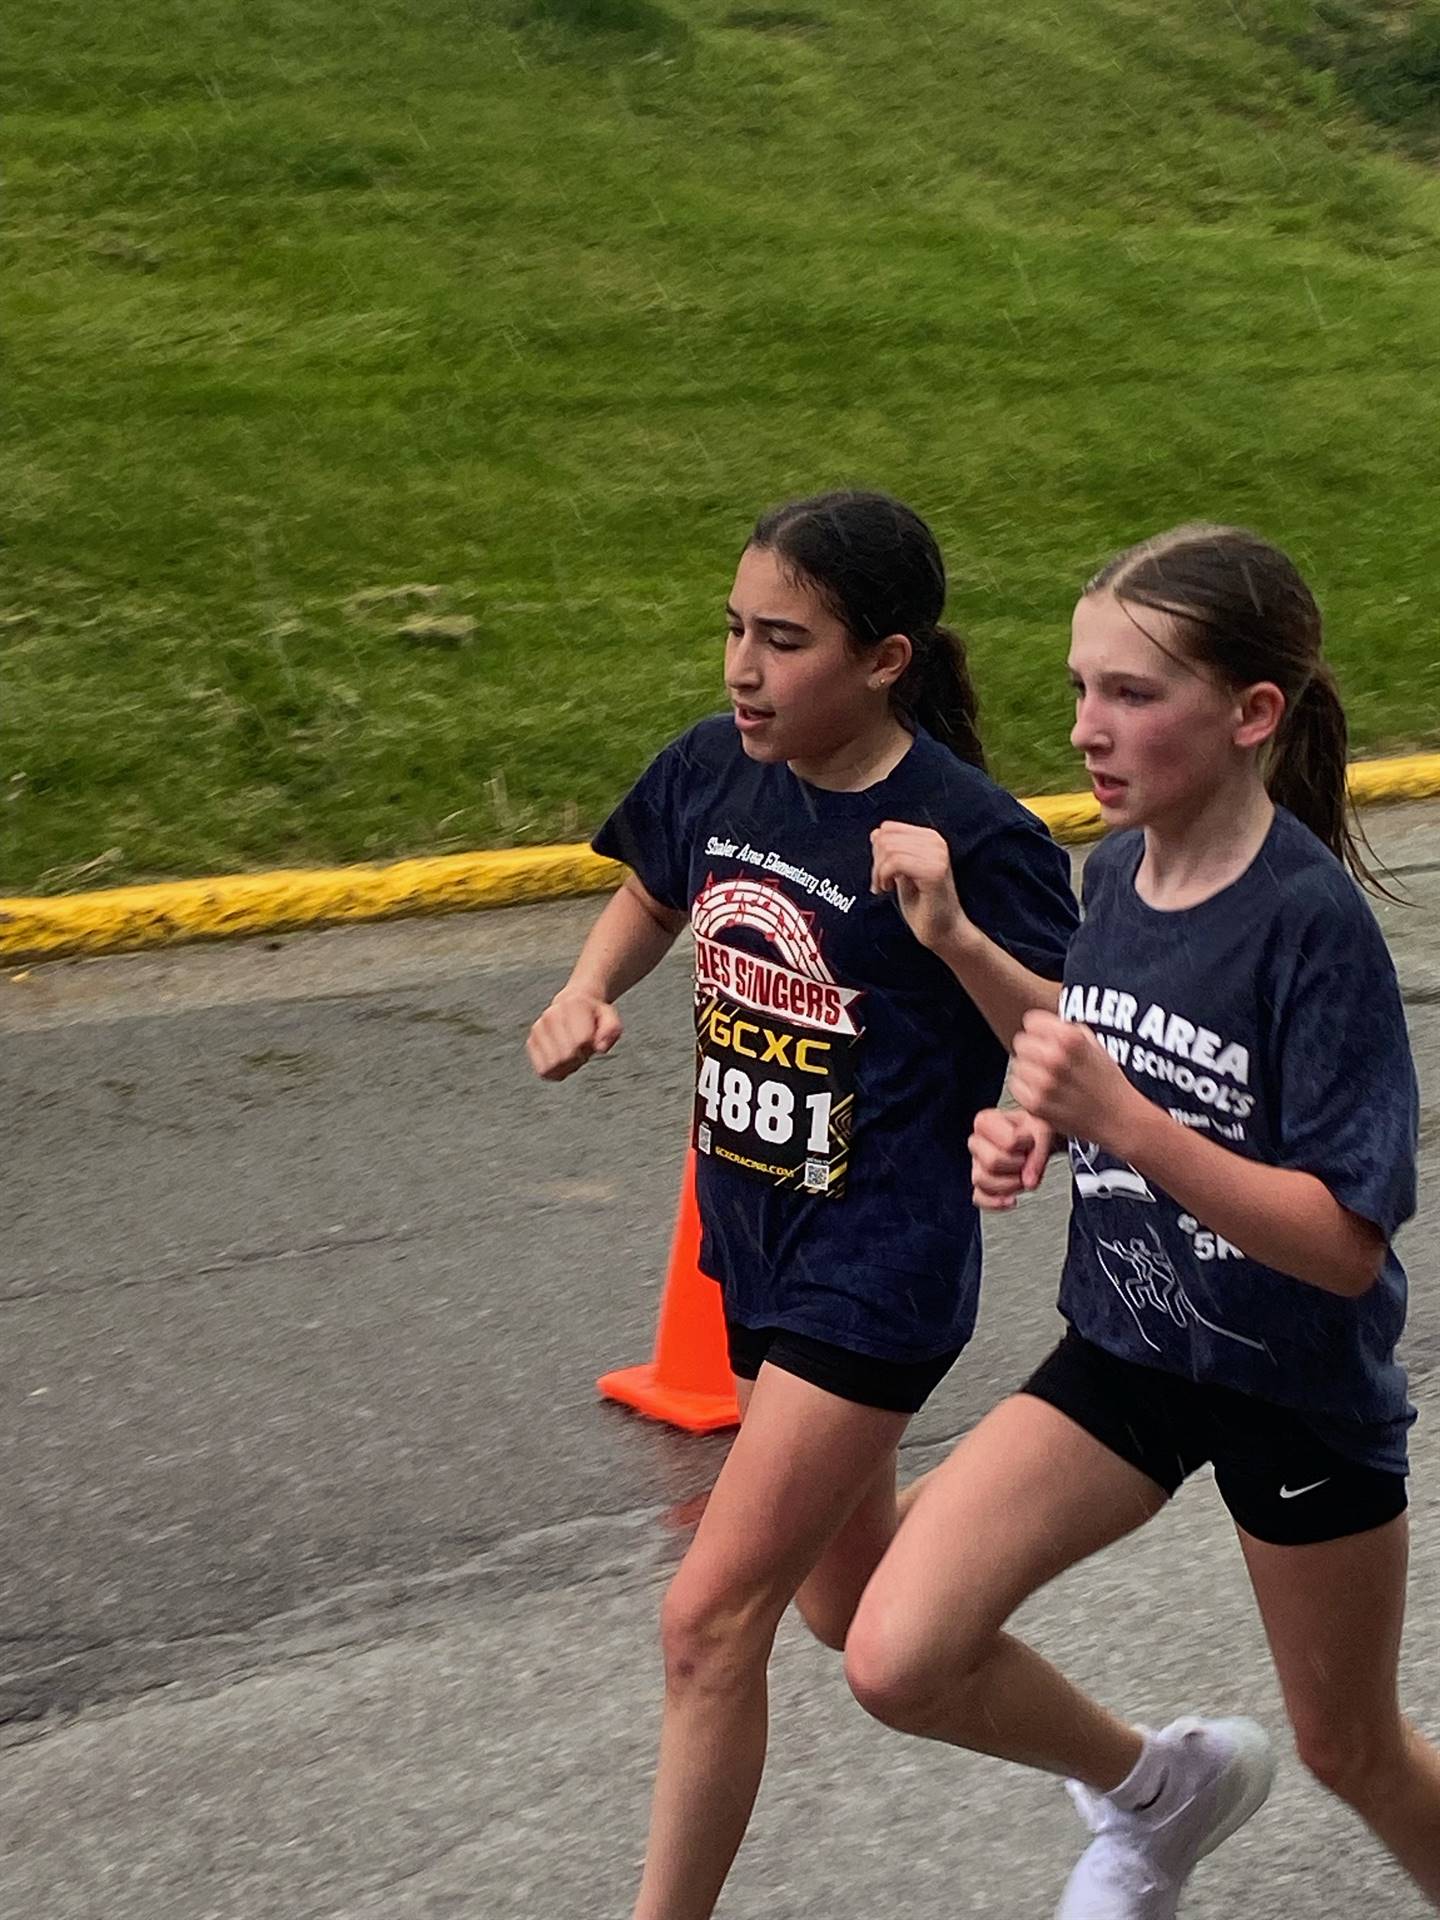 2 girls running at 5K race